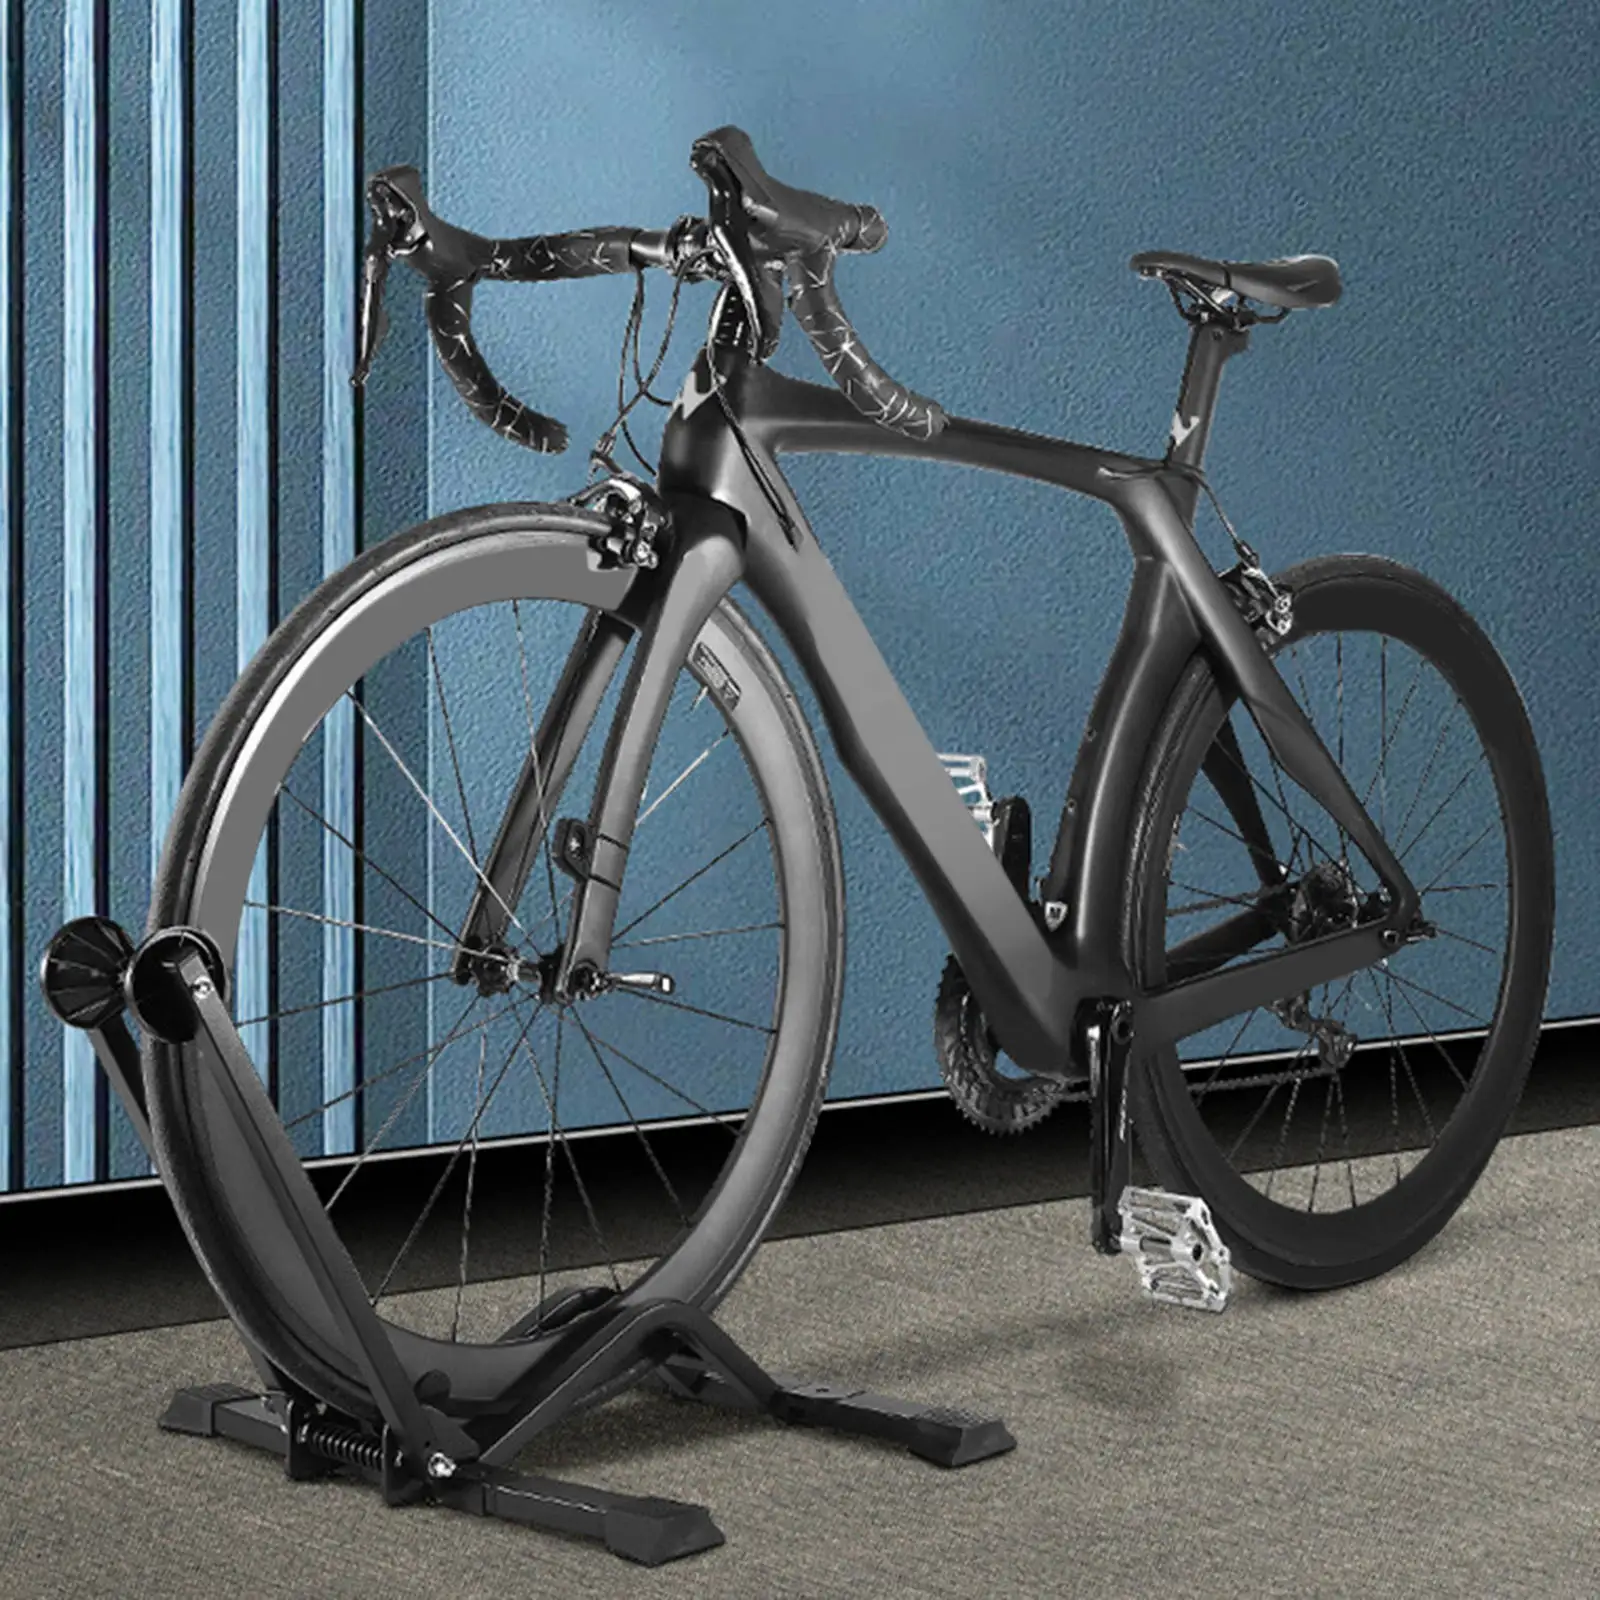 Portable Bike Storage Stand Bicycle Foldable Steel Floor Parking Rack Wheel Holder For Indoor Home Garage Bike Accessories